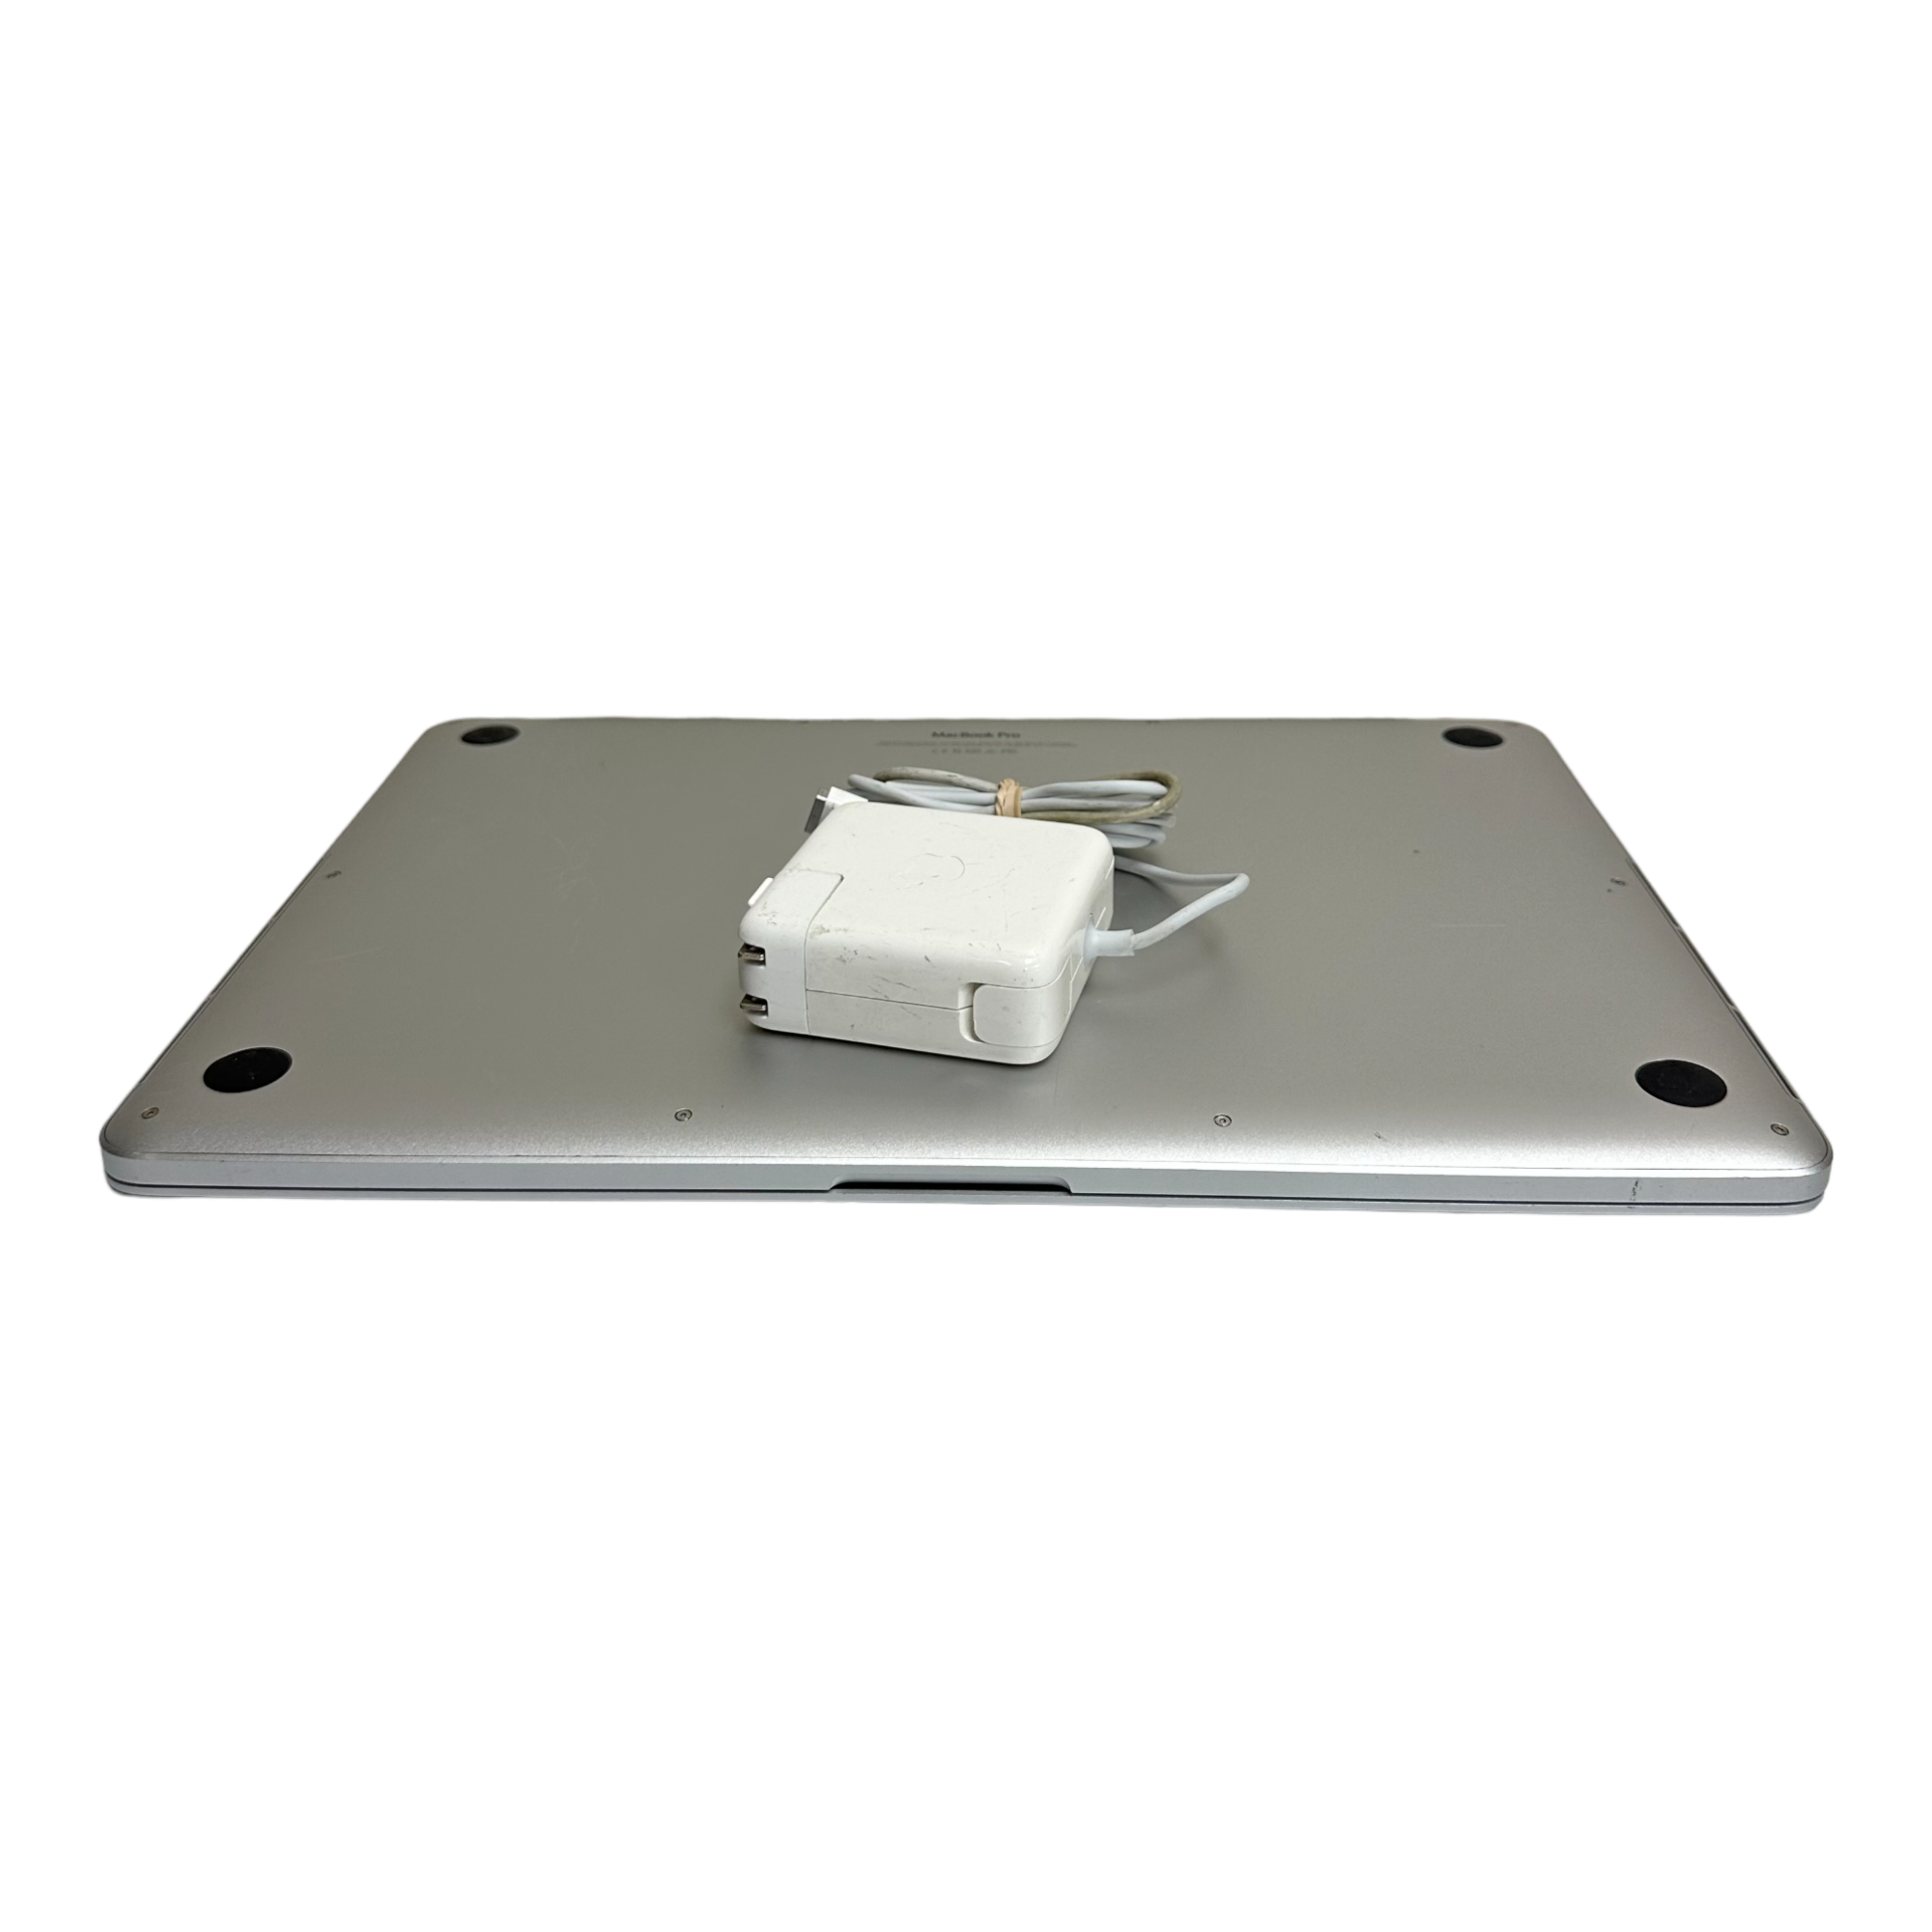 Apple MacBook Pro (Mid 2015) 15" i7 2.8GHz 16GB RAM 256GB SSD Intel Iris Laptop